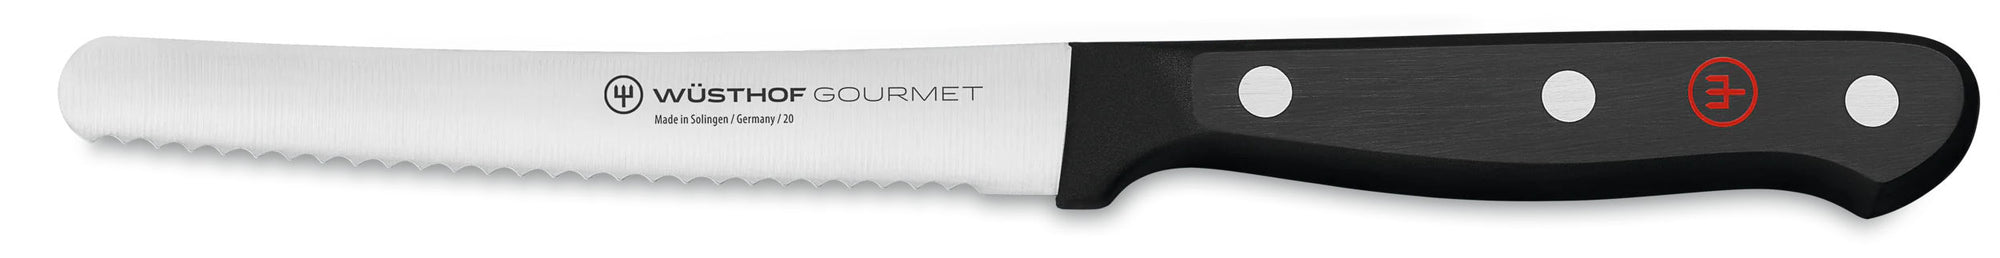 Wusthof Gourmet Utility Knife, Serrated, 4.5-inch - 4101